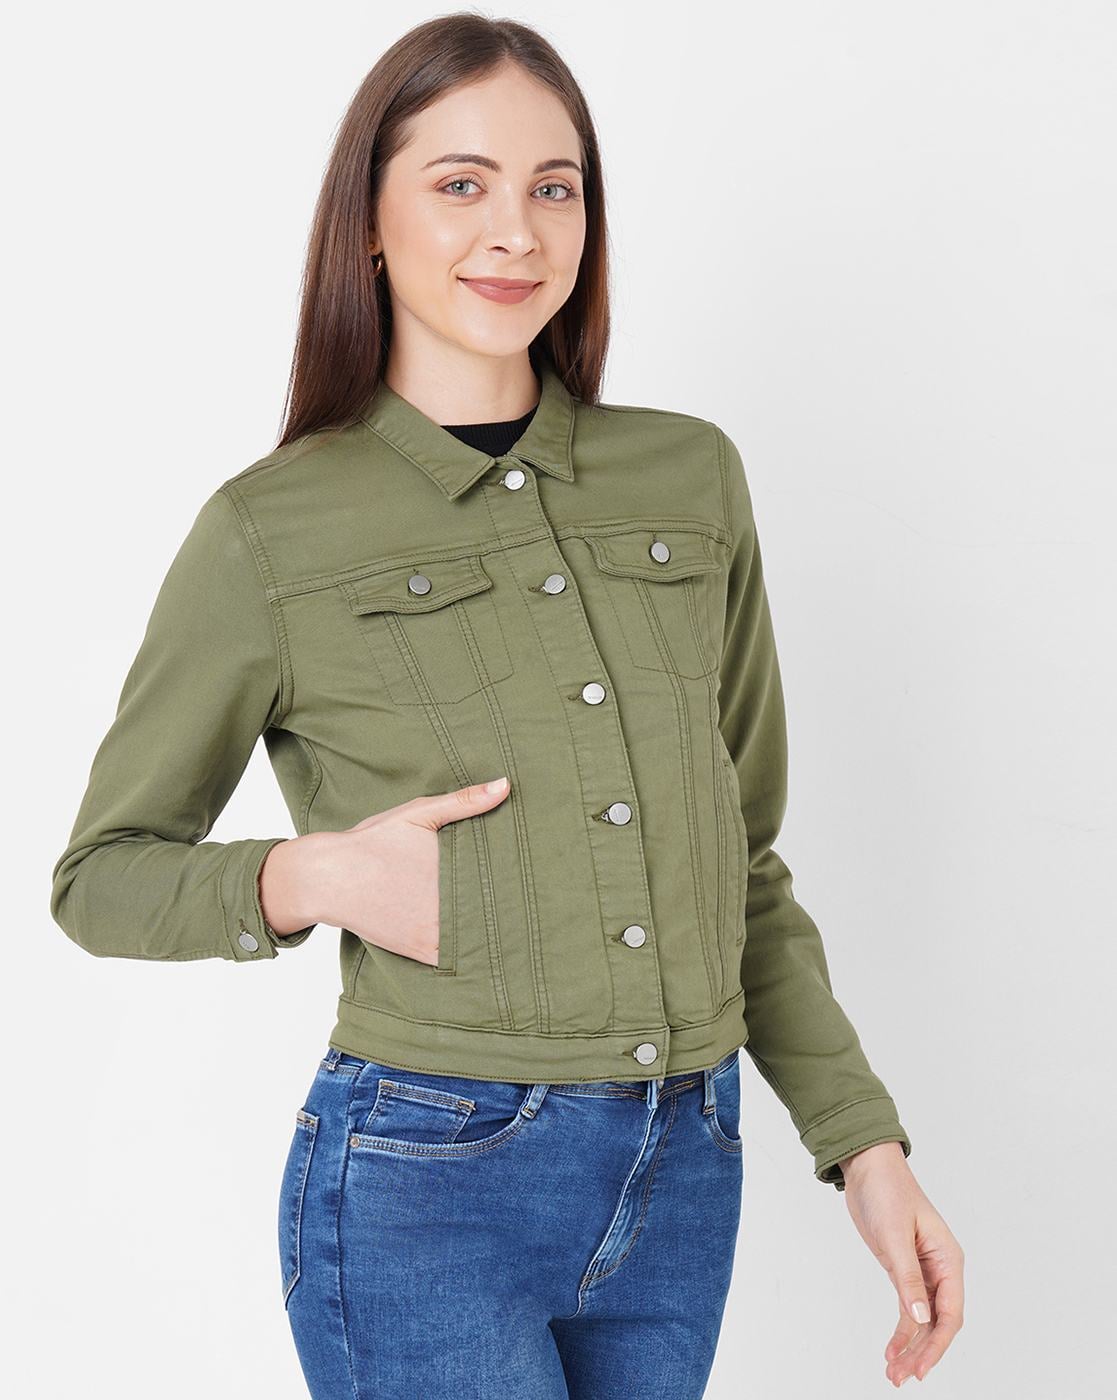 Old Navy Army Green Denim Jean Jacket Trucker Size L Button Front Womens |  eBay